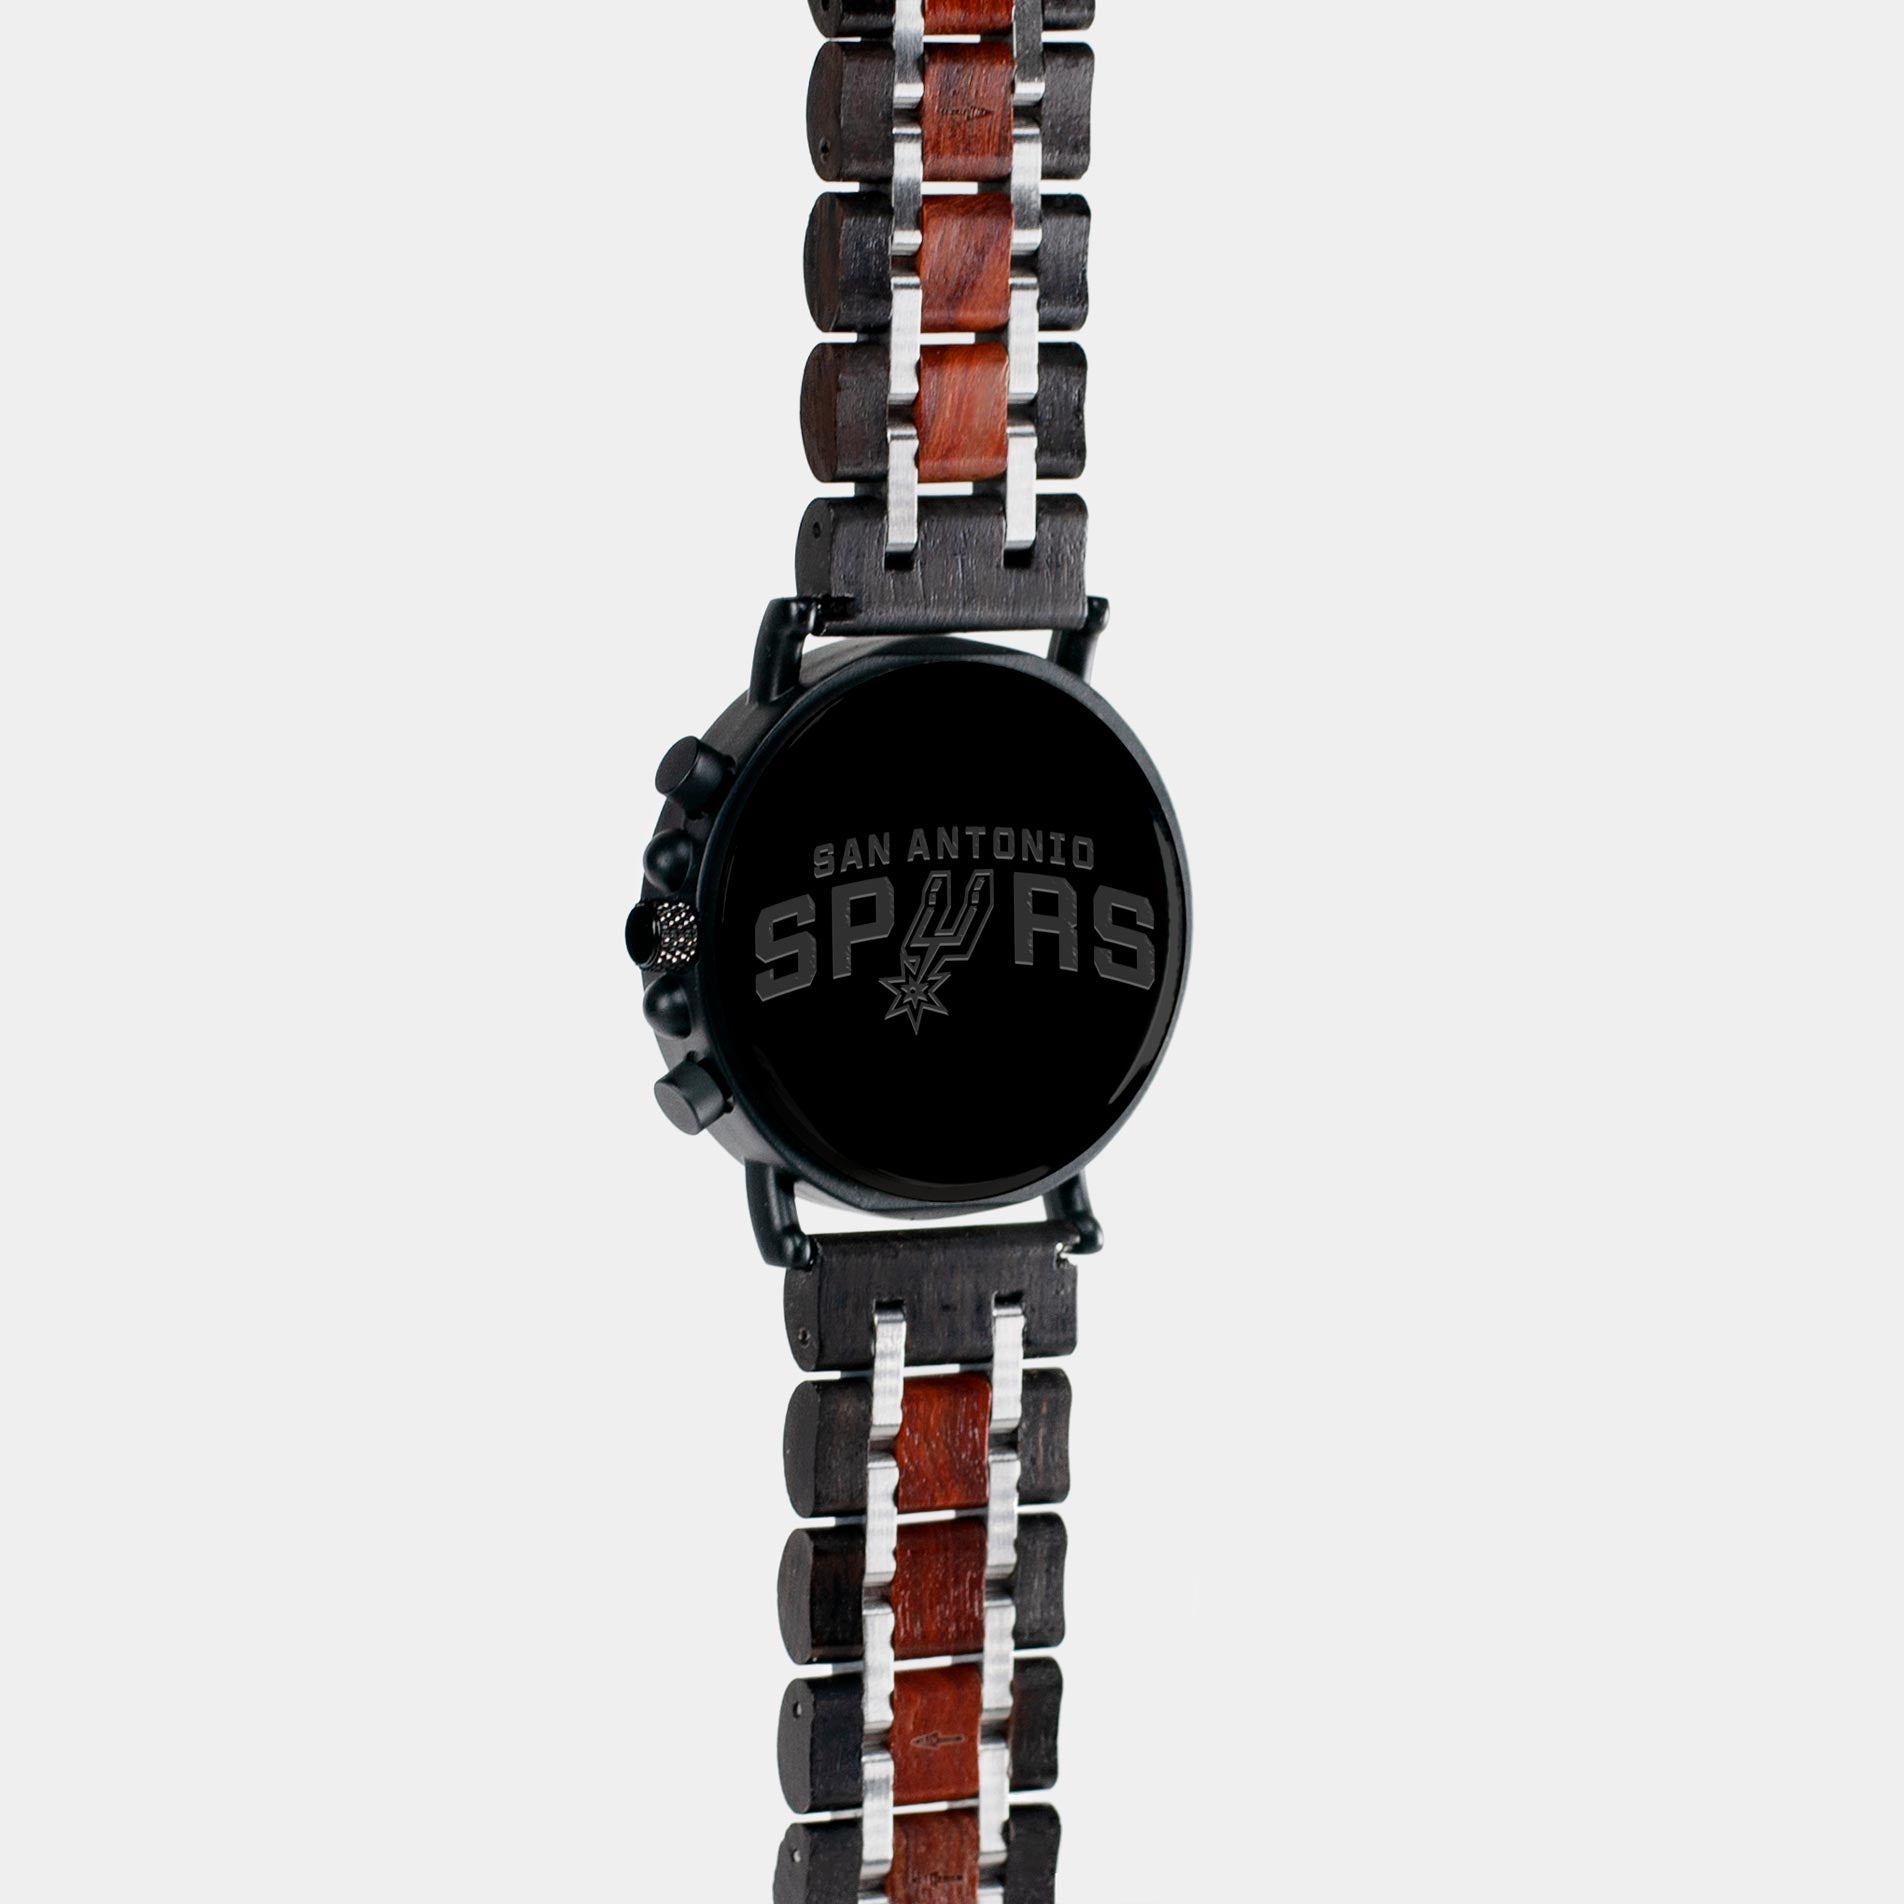 ORIG. Antonio Giovine Men's Watch Chronograph Leather Brown OAG-005,  Strap.: Buy Online at Best Price in UAE - Amazon.ae